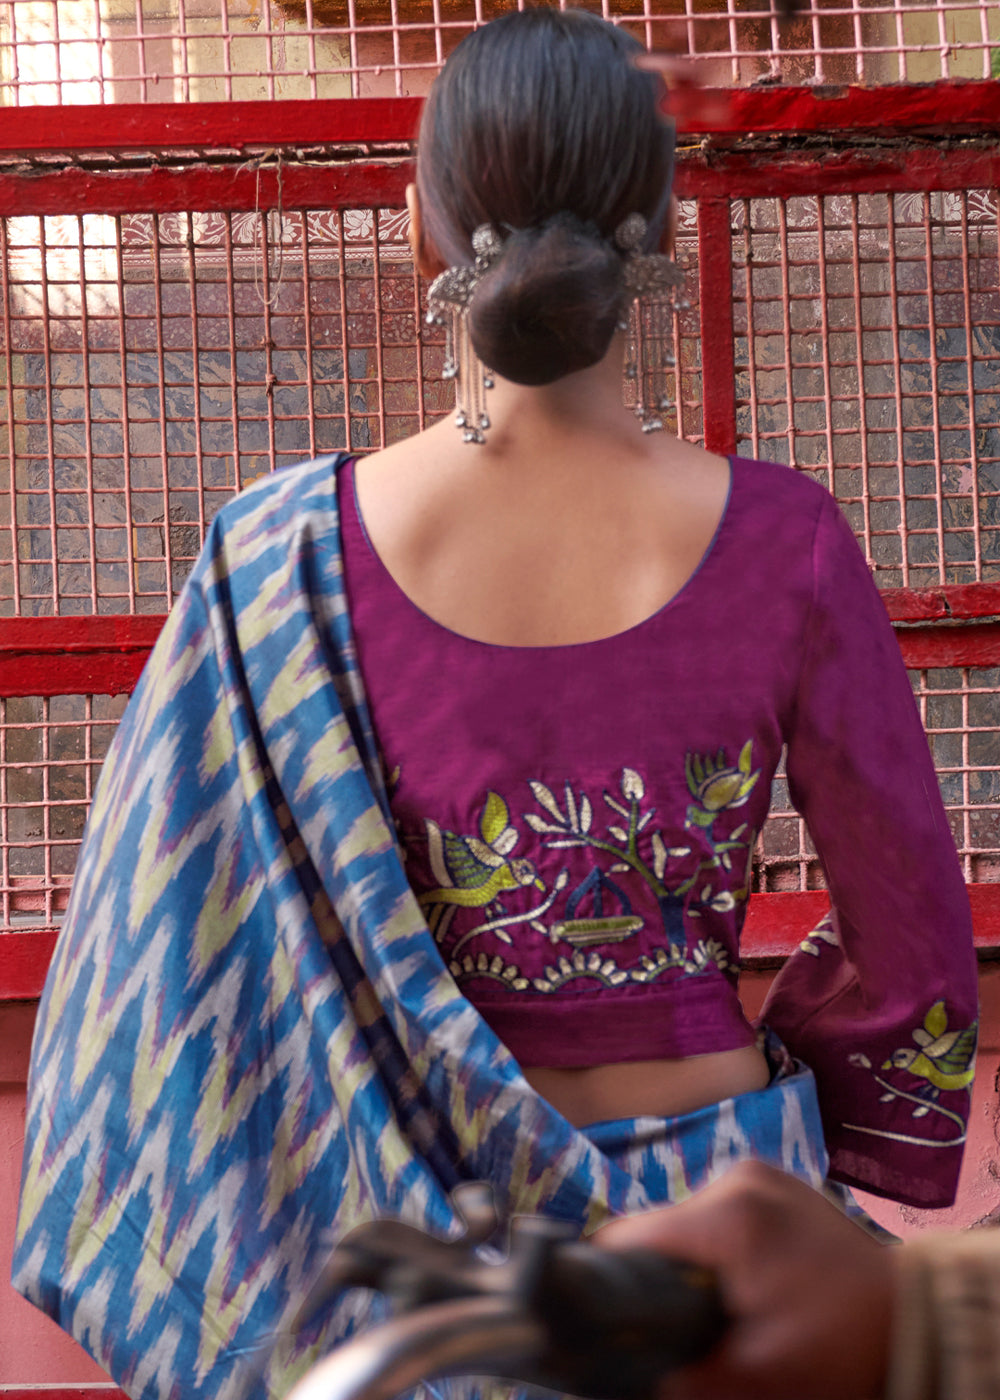 Sapphire Blue Ikkat Silk Jaipuri Saree with Embroidery Designer Blouse